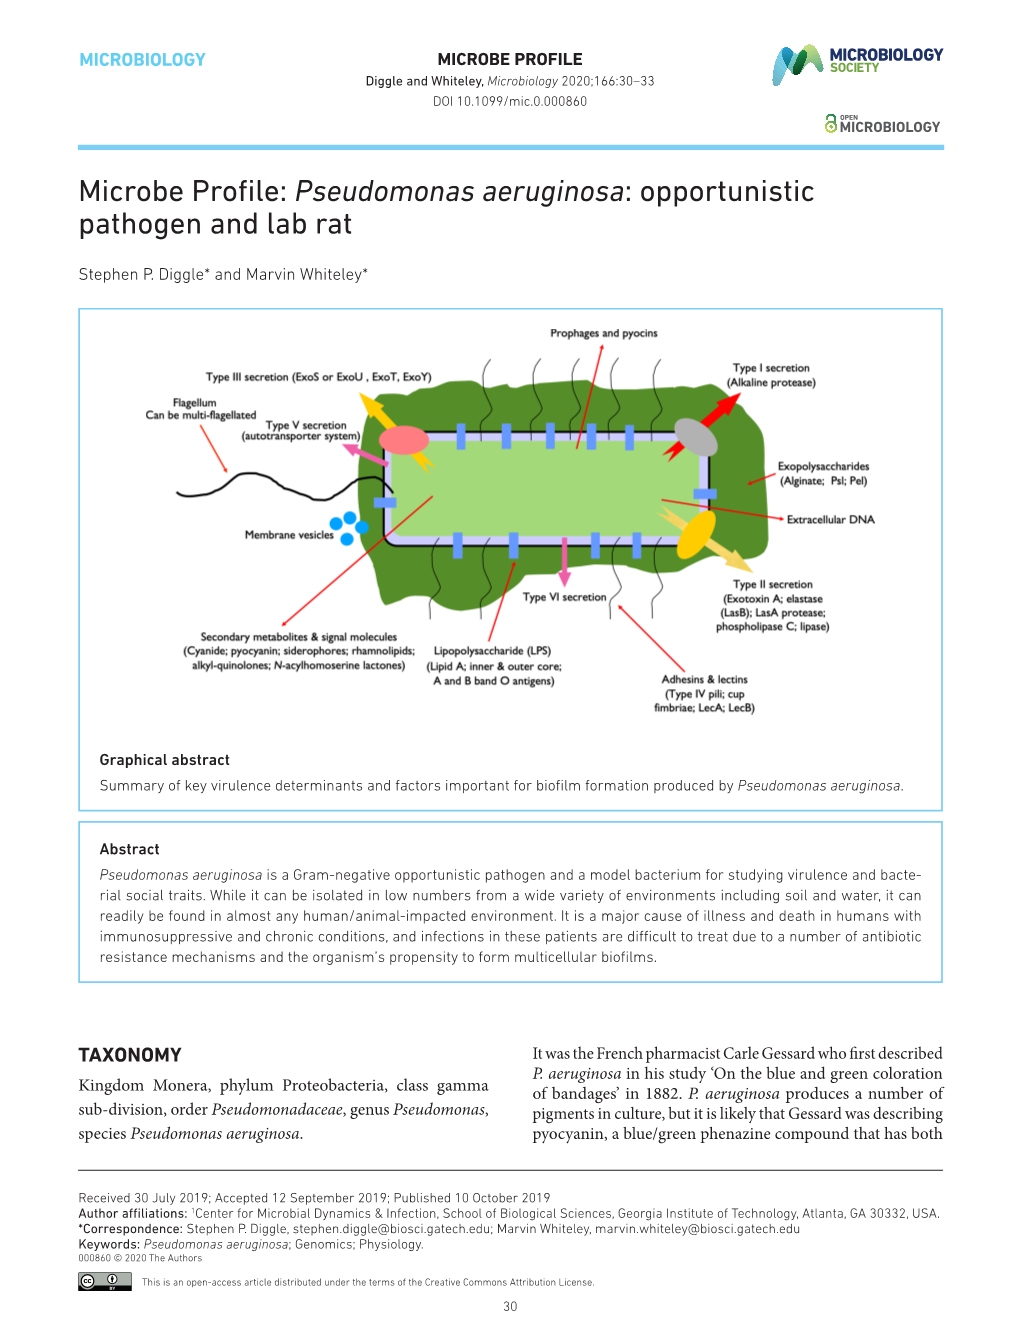 Microbe Profile: Pseudomonas Aeruginosa: Opportunistic Pathogen and Lab Rat